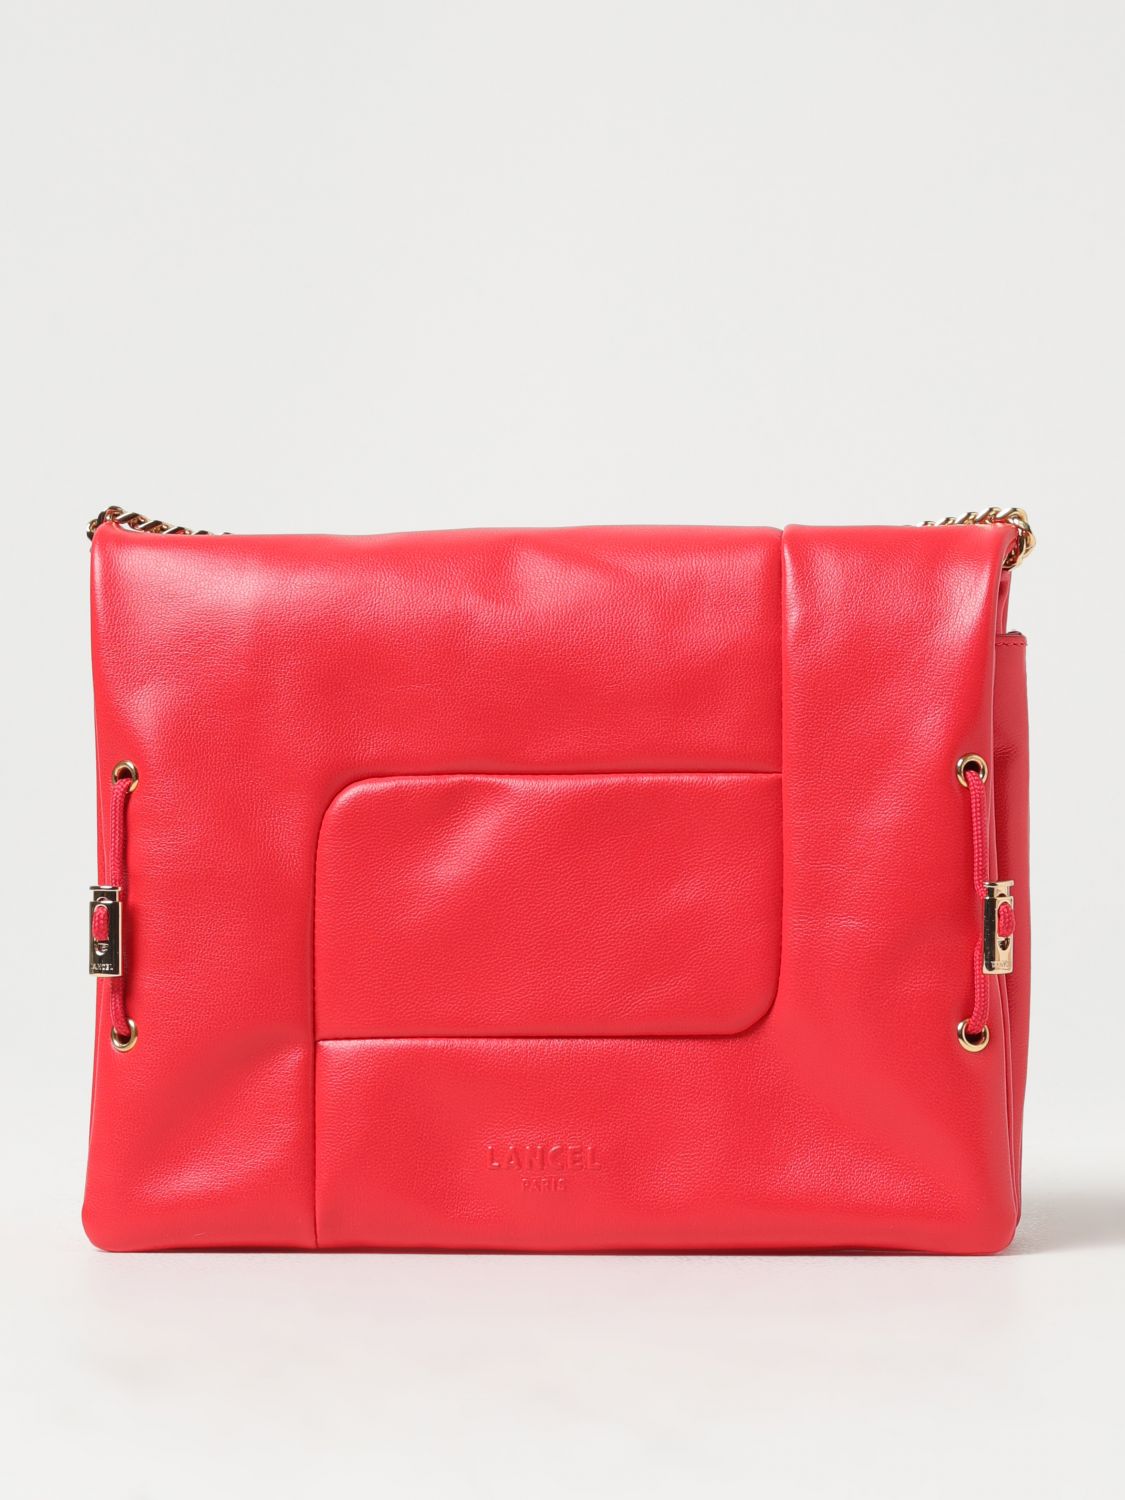 Lancel Handbag LANCEL Woman colour Red